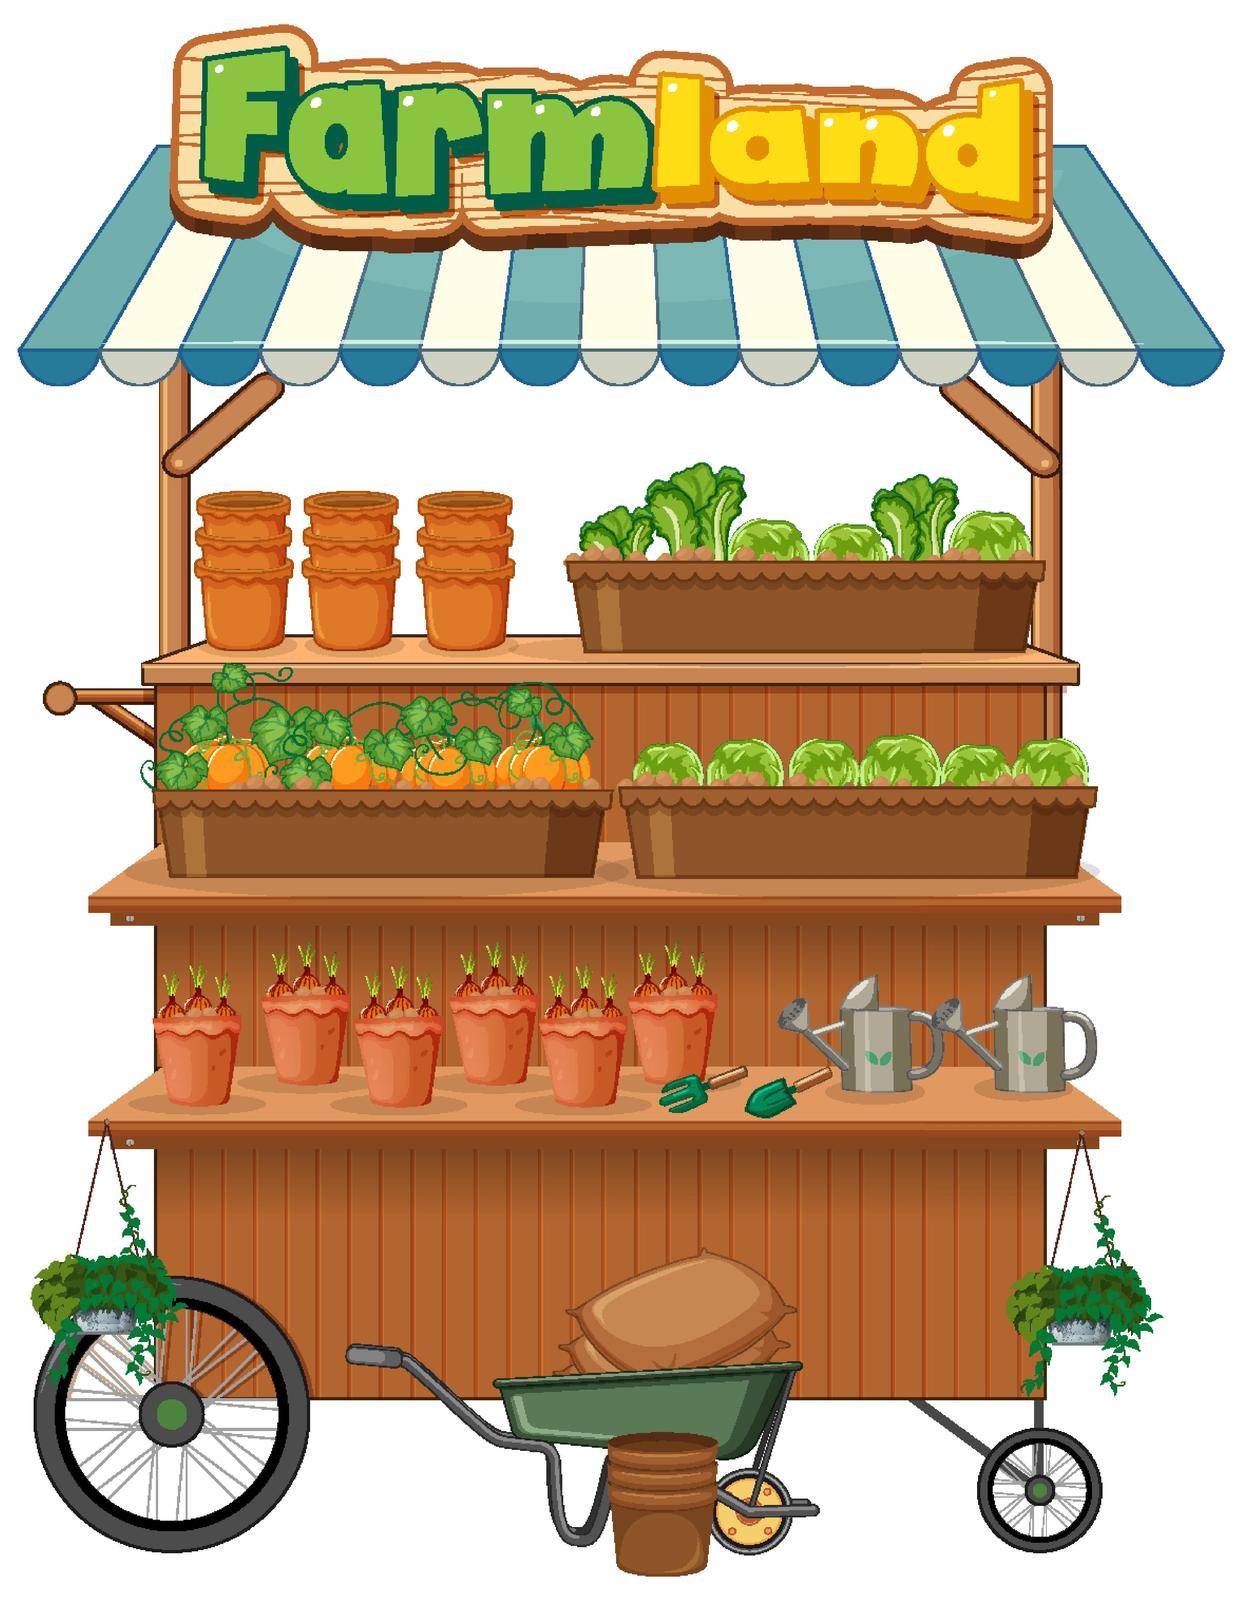 Farmland shop sells plants with farmland logo on white background illustration